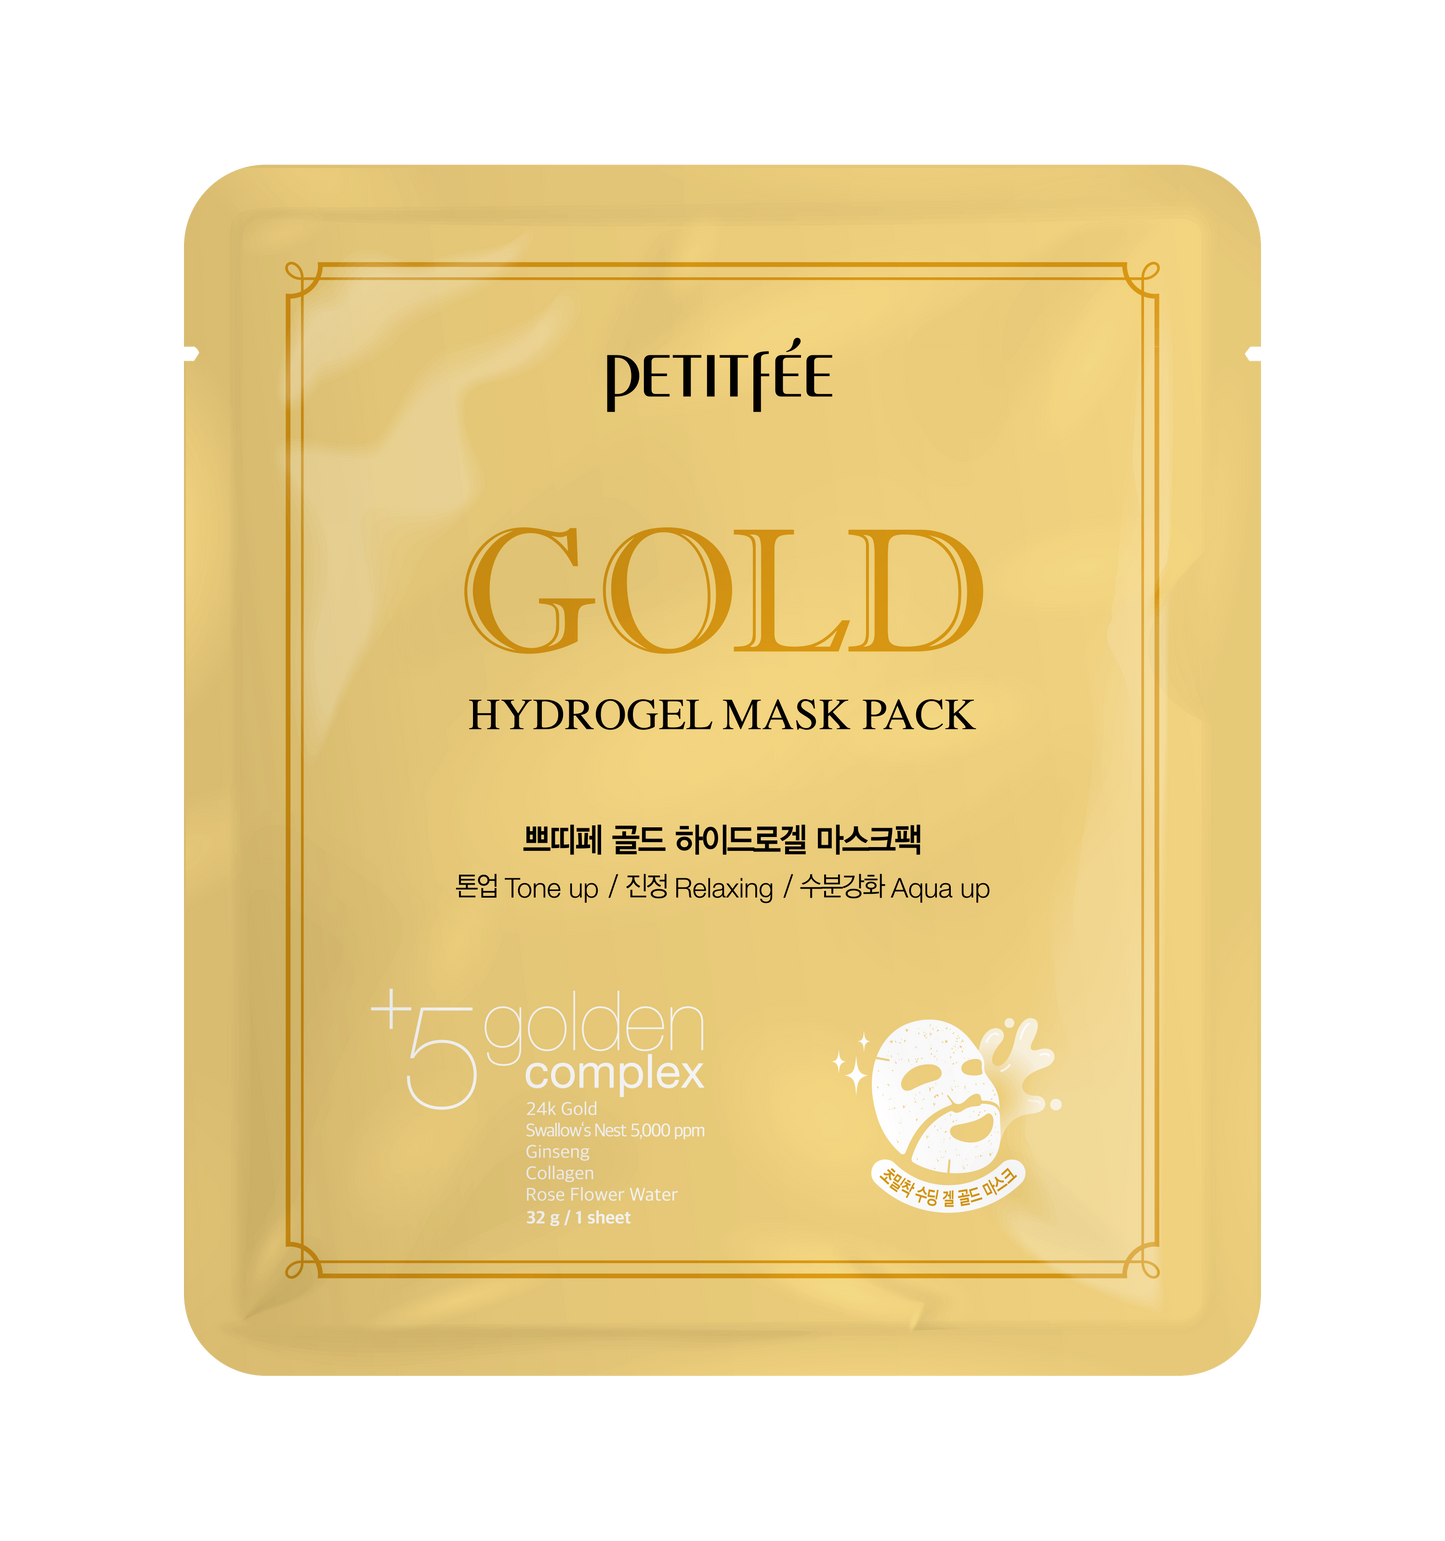 Petitfee Hydrogel Gold face mask 5 τμχ